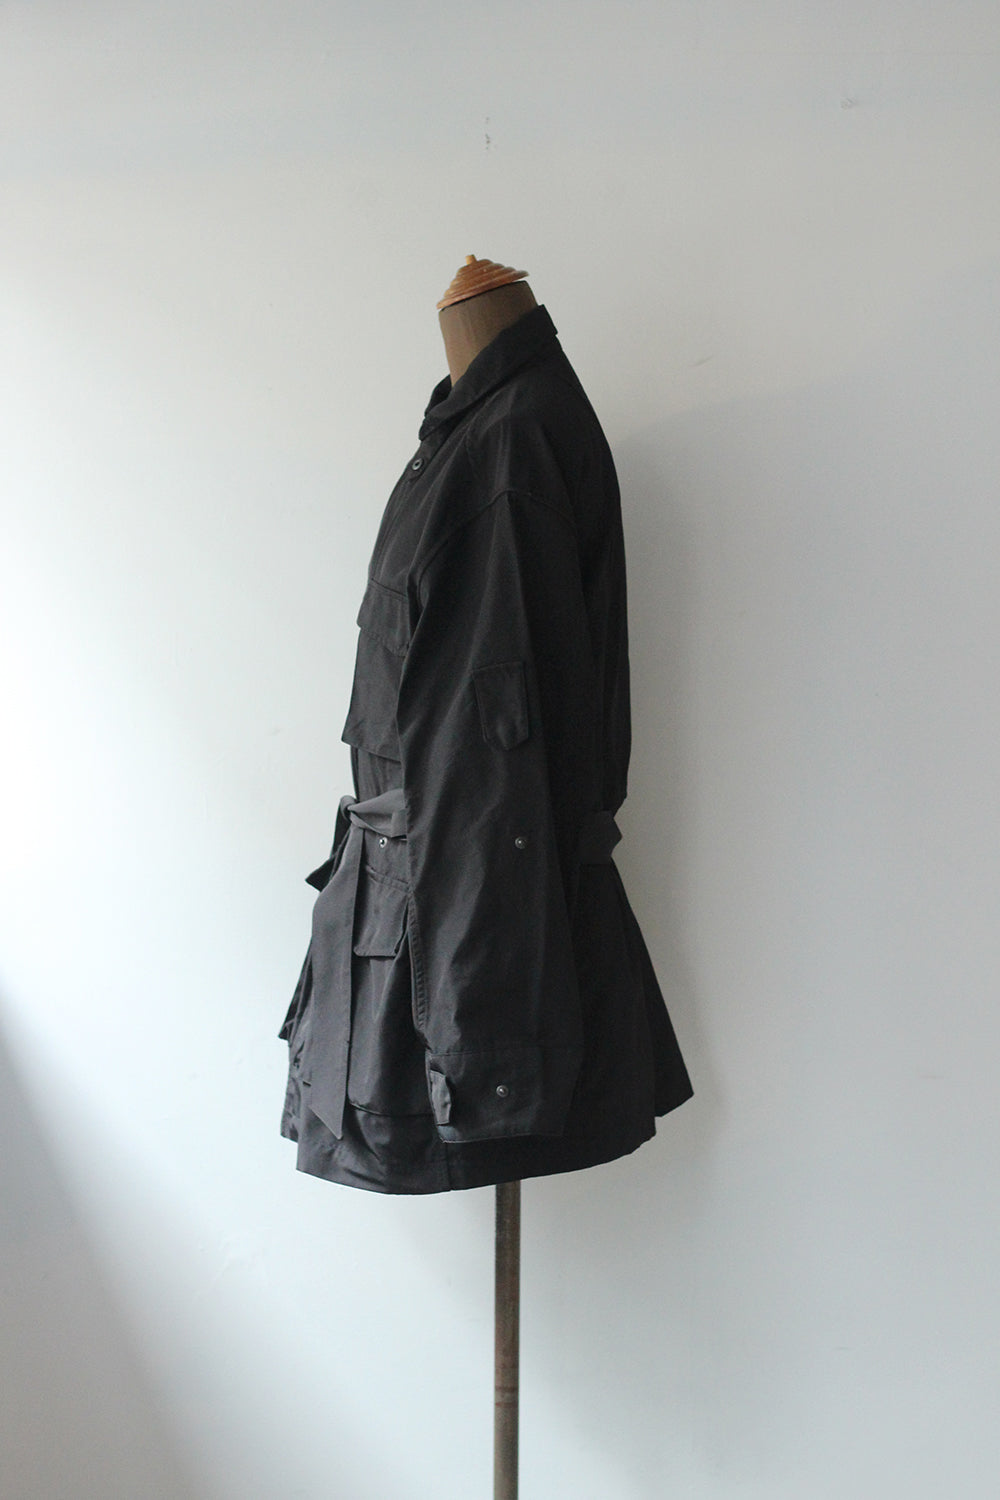 JUN MIKAMI "variable jacket" (black)